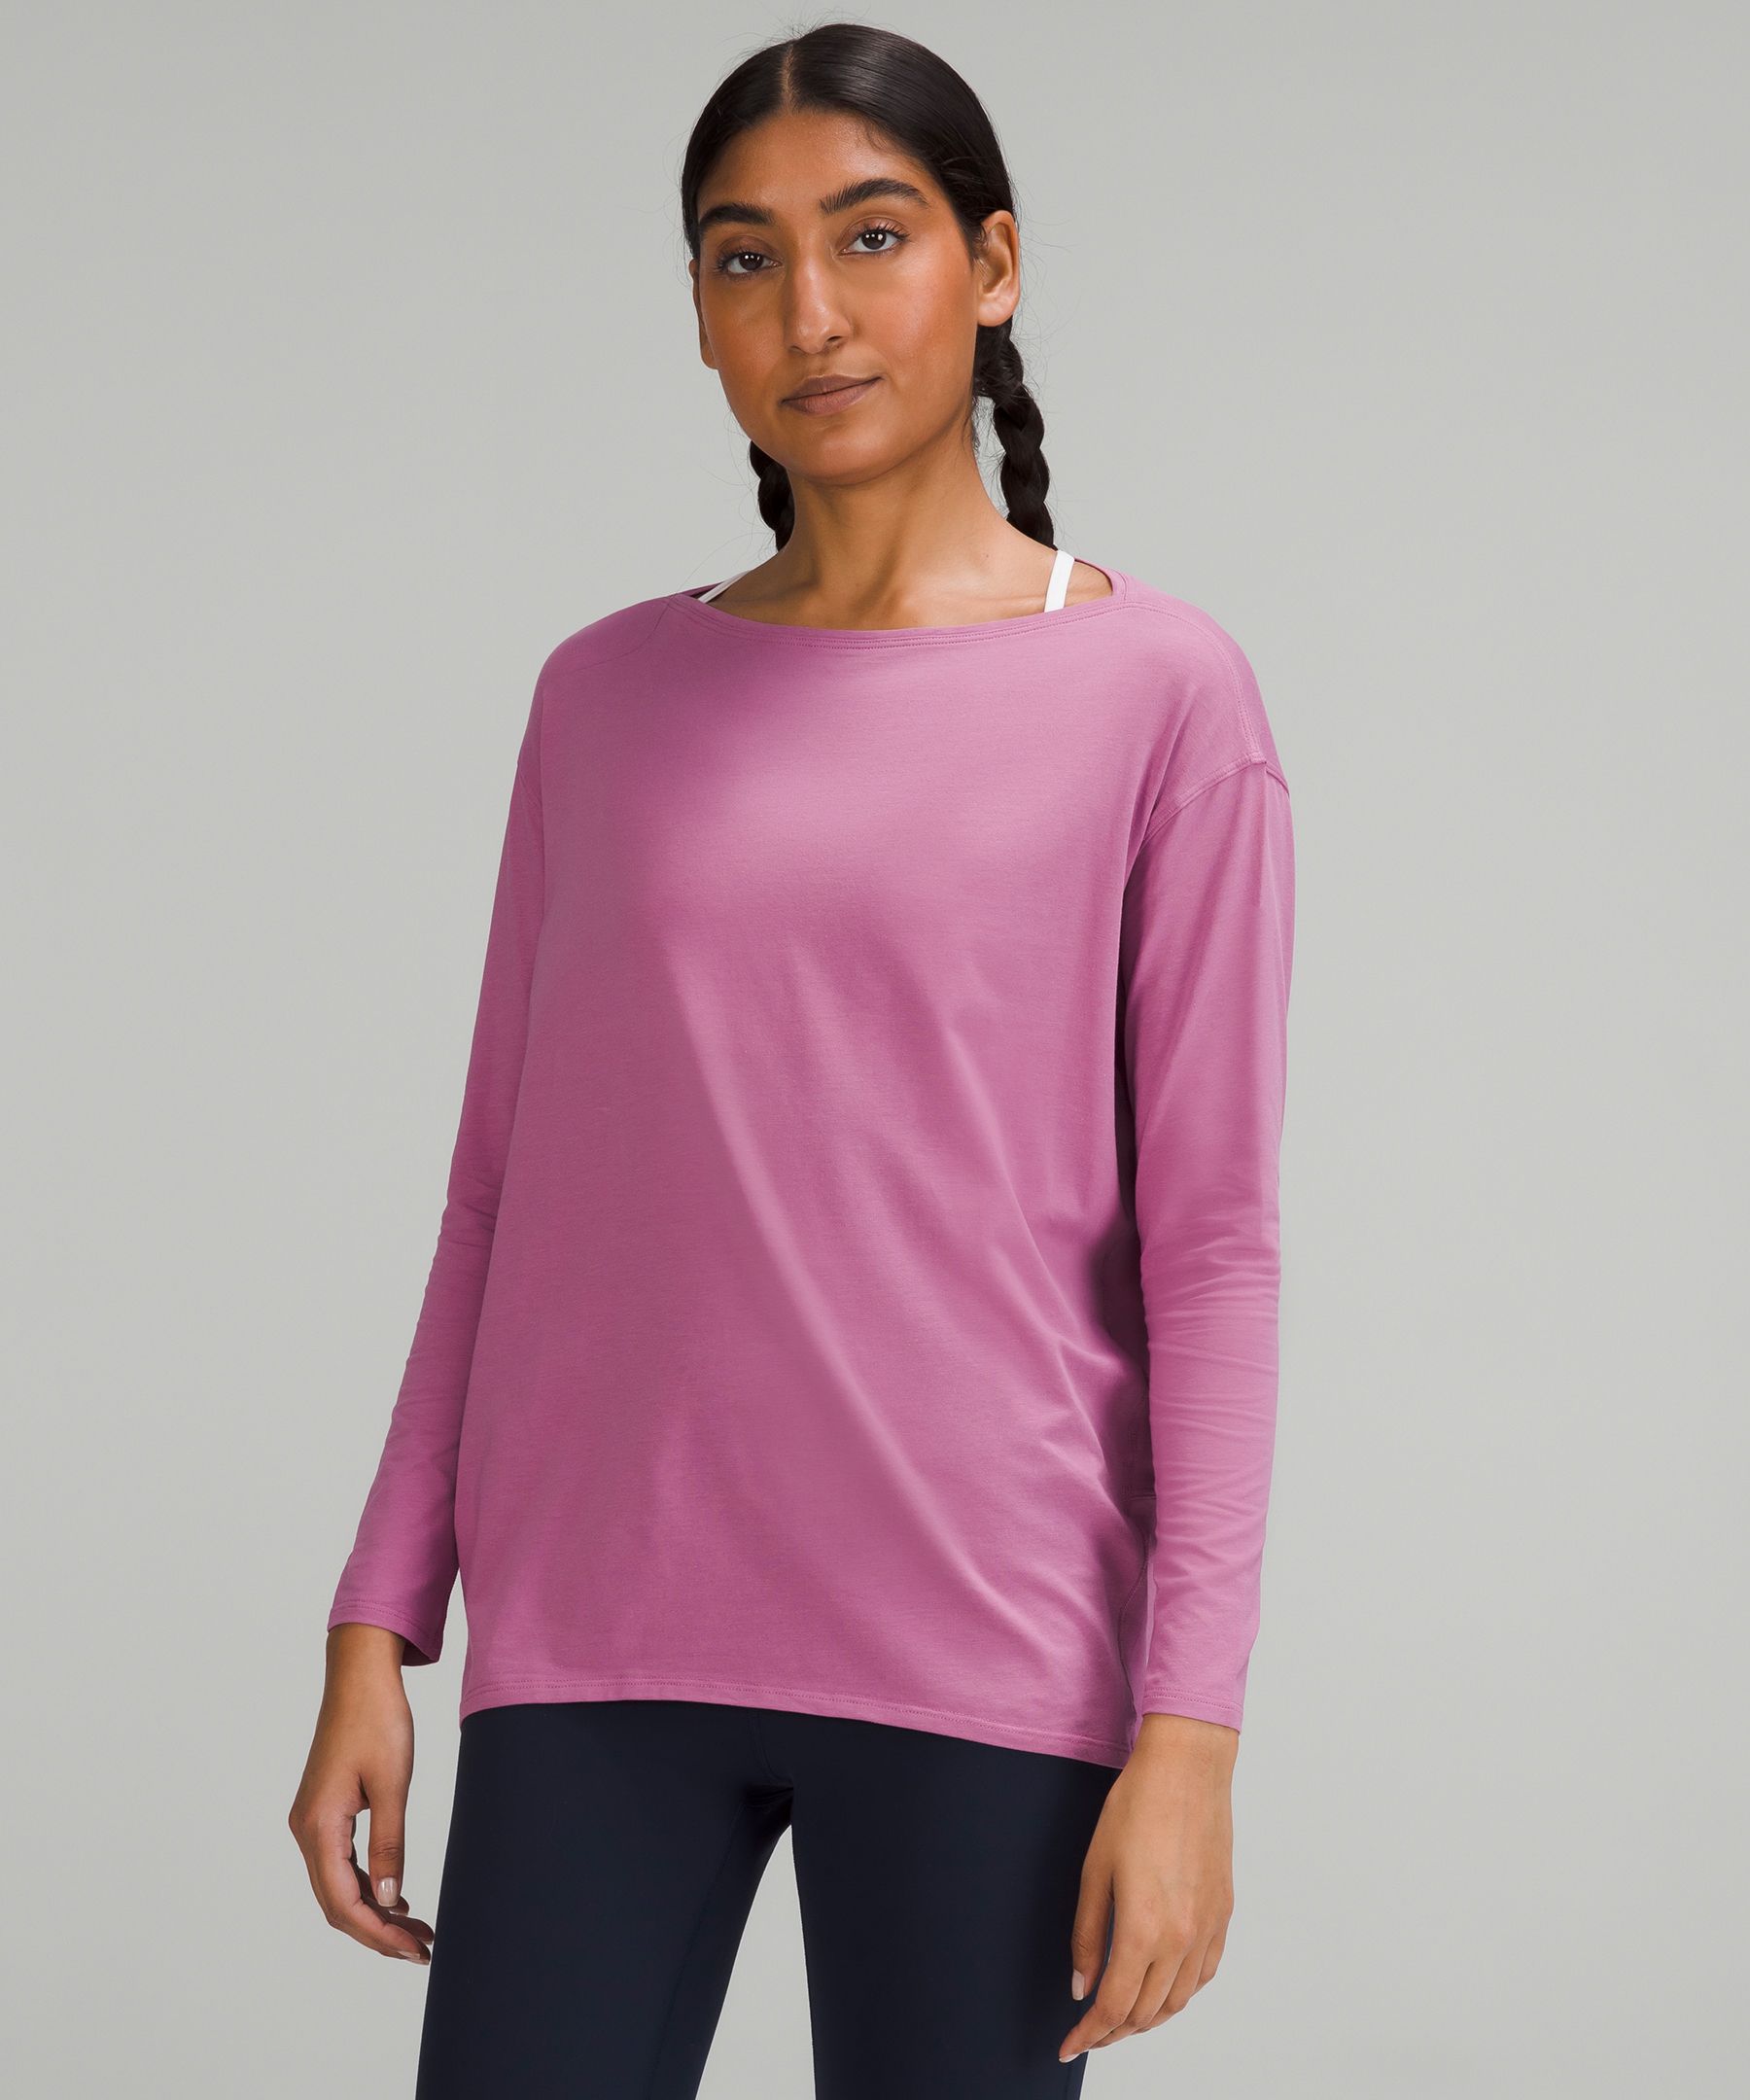 Lululemon Back in Action Long Sleeve Shirt - Pink Pima Cotton Fabric